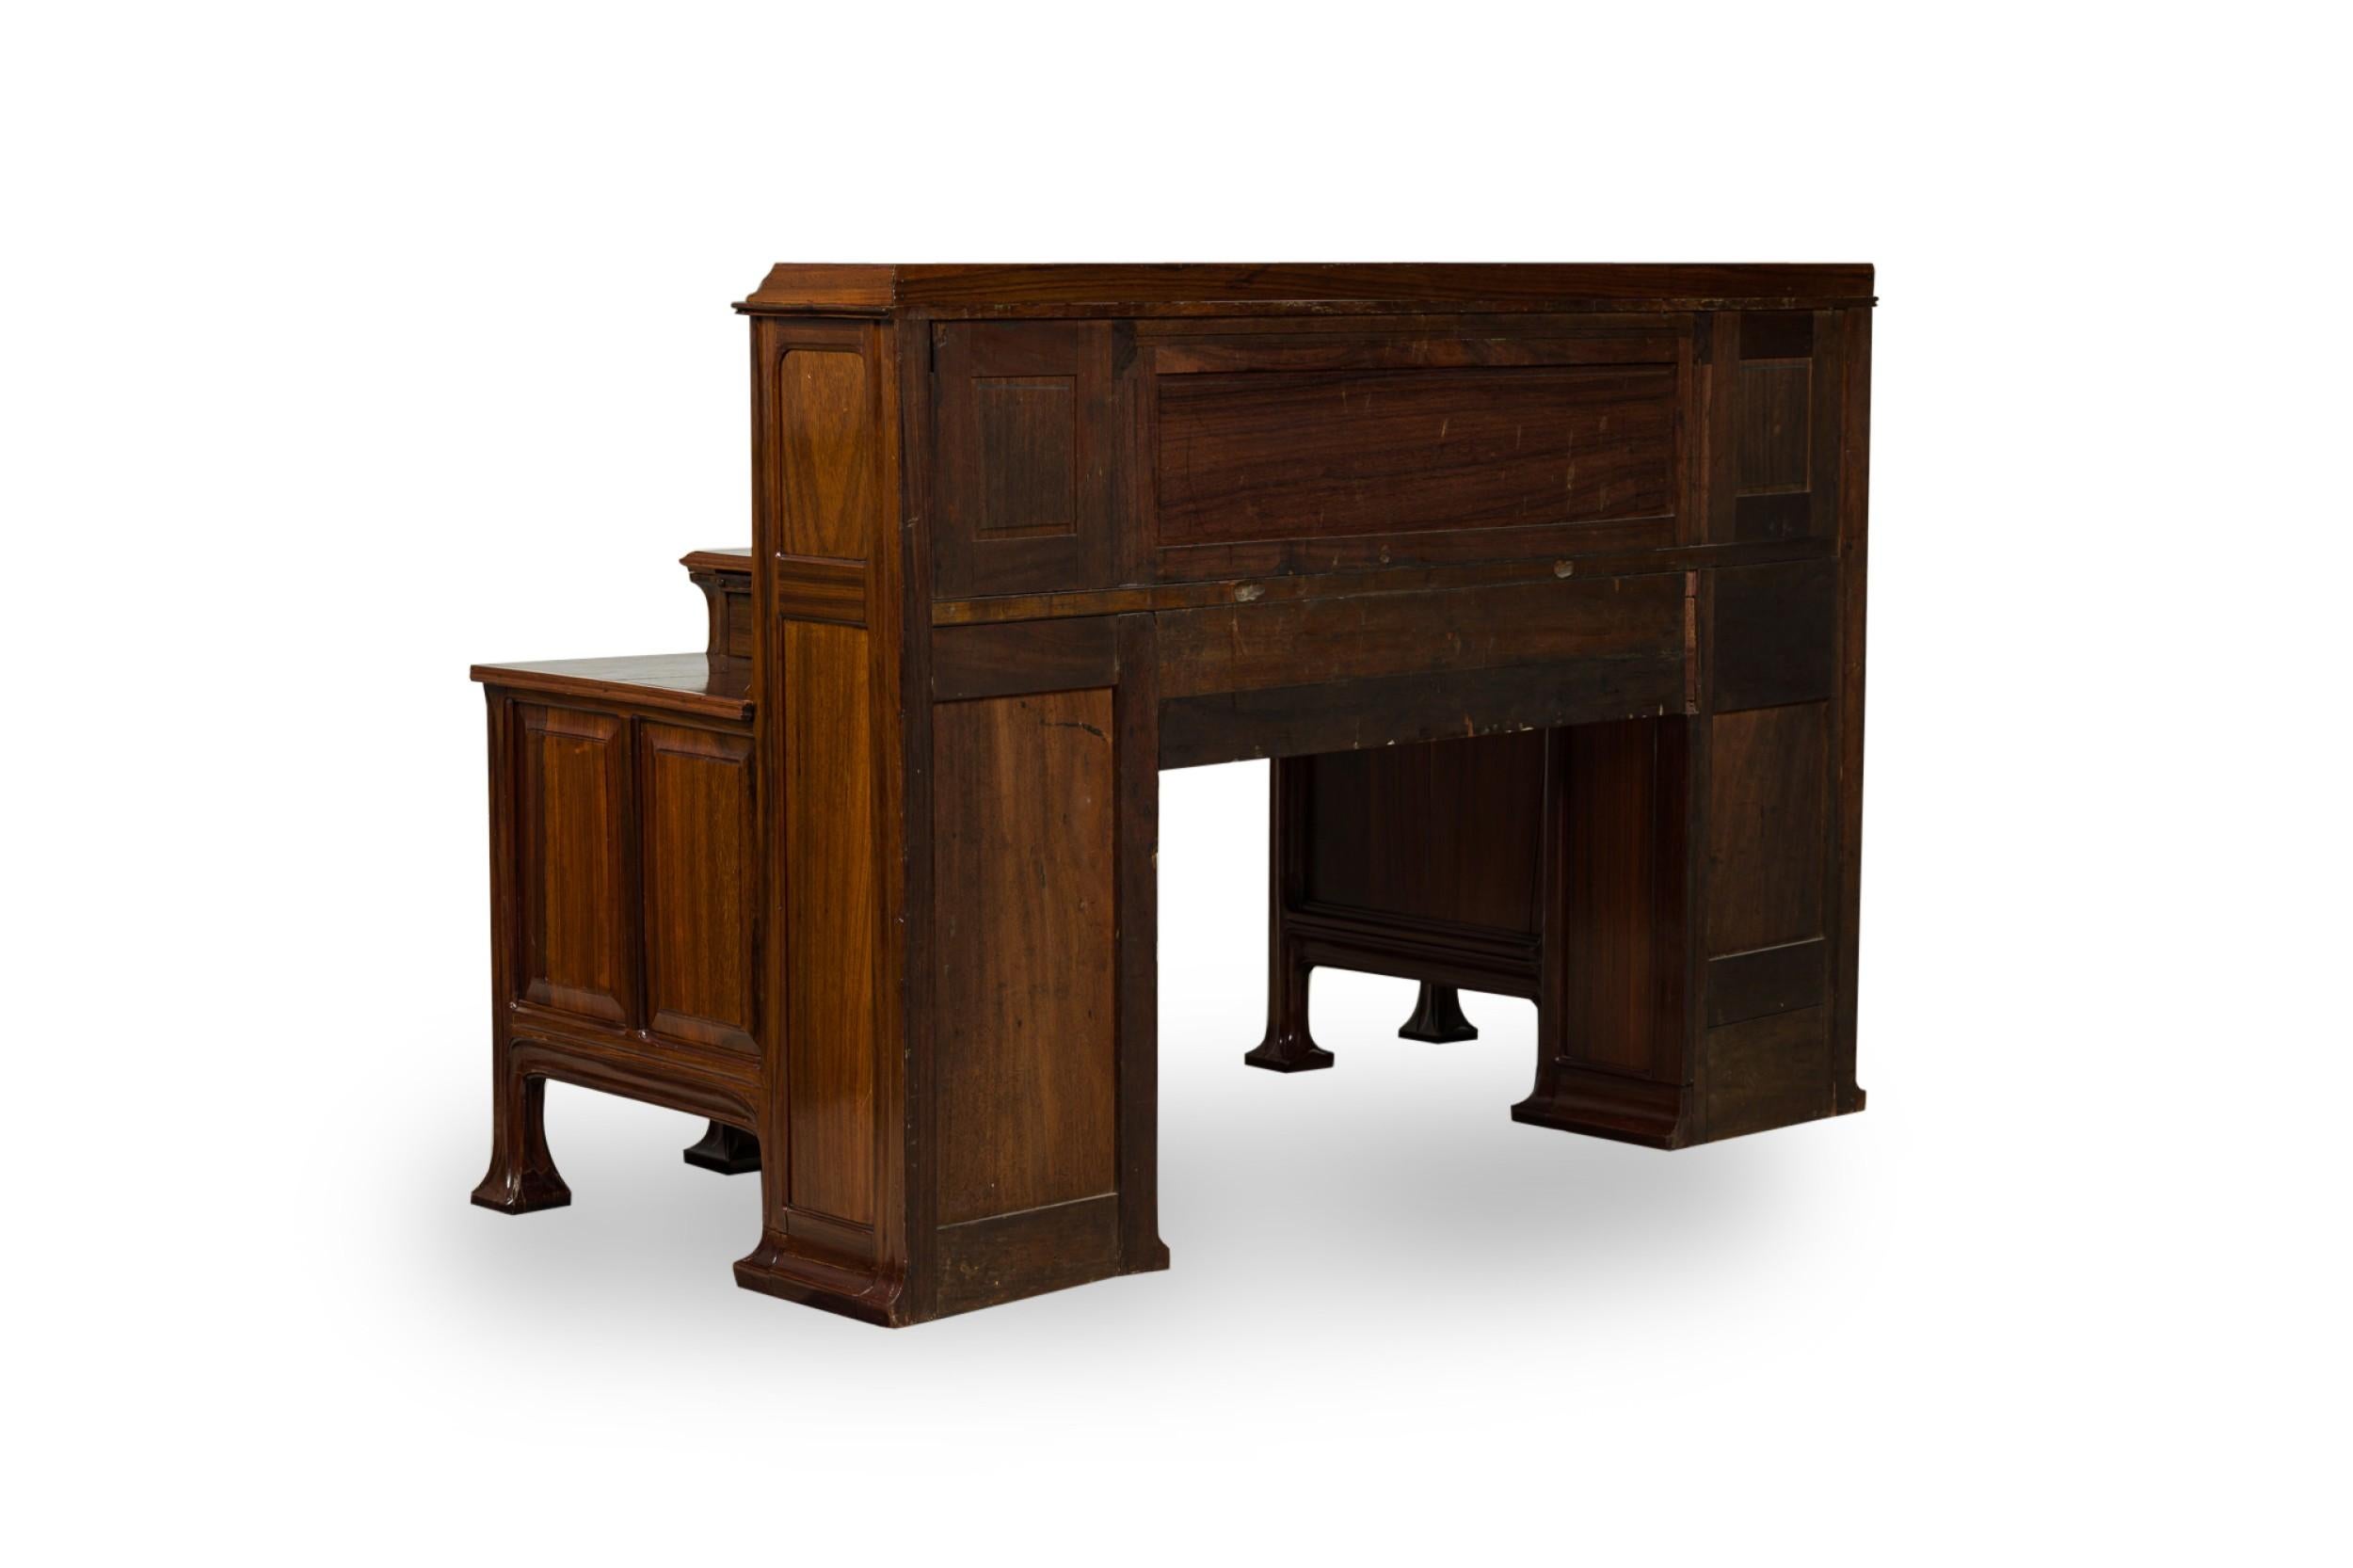 20th Century Tony Selmersheim French Art Nouveau Oak and Brass Architect's Desk For Sale